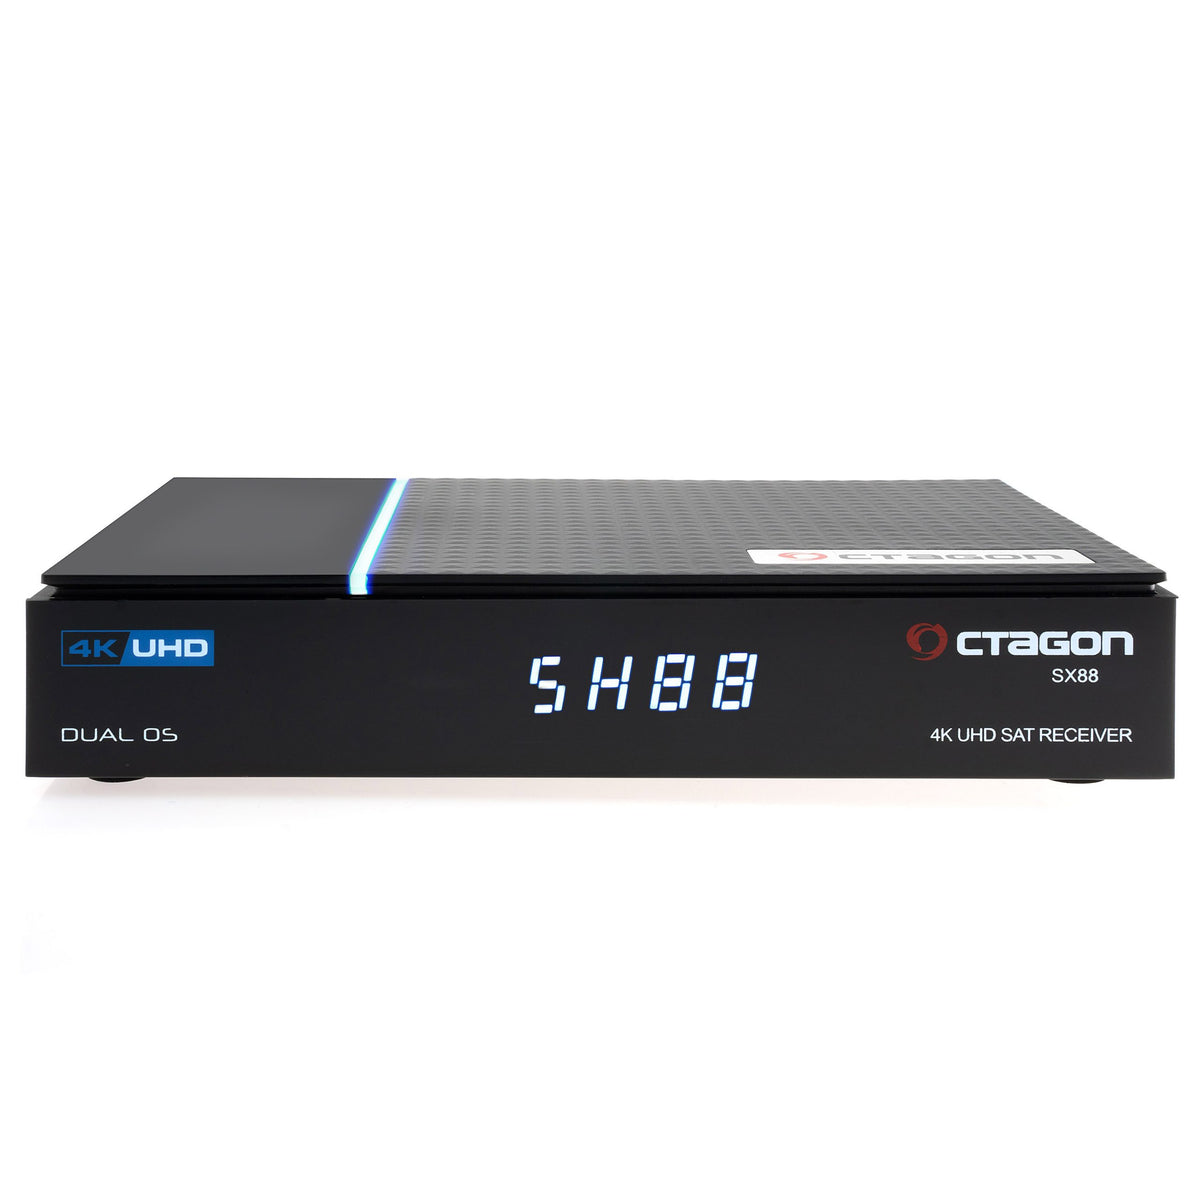 OCTAGON SX88 V2 4K UHD S2+IP E2 Linux + DEFINE Linux OS Dual Multiboot, SAT>IP Satellite Receiver